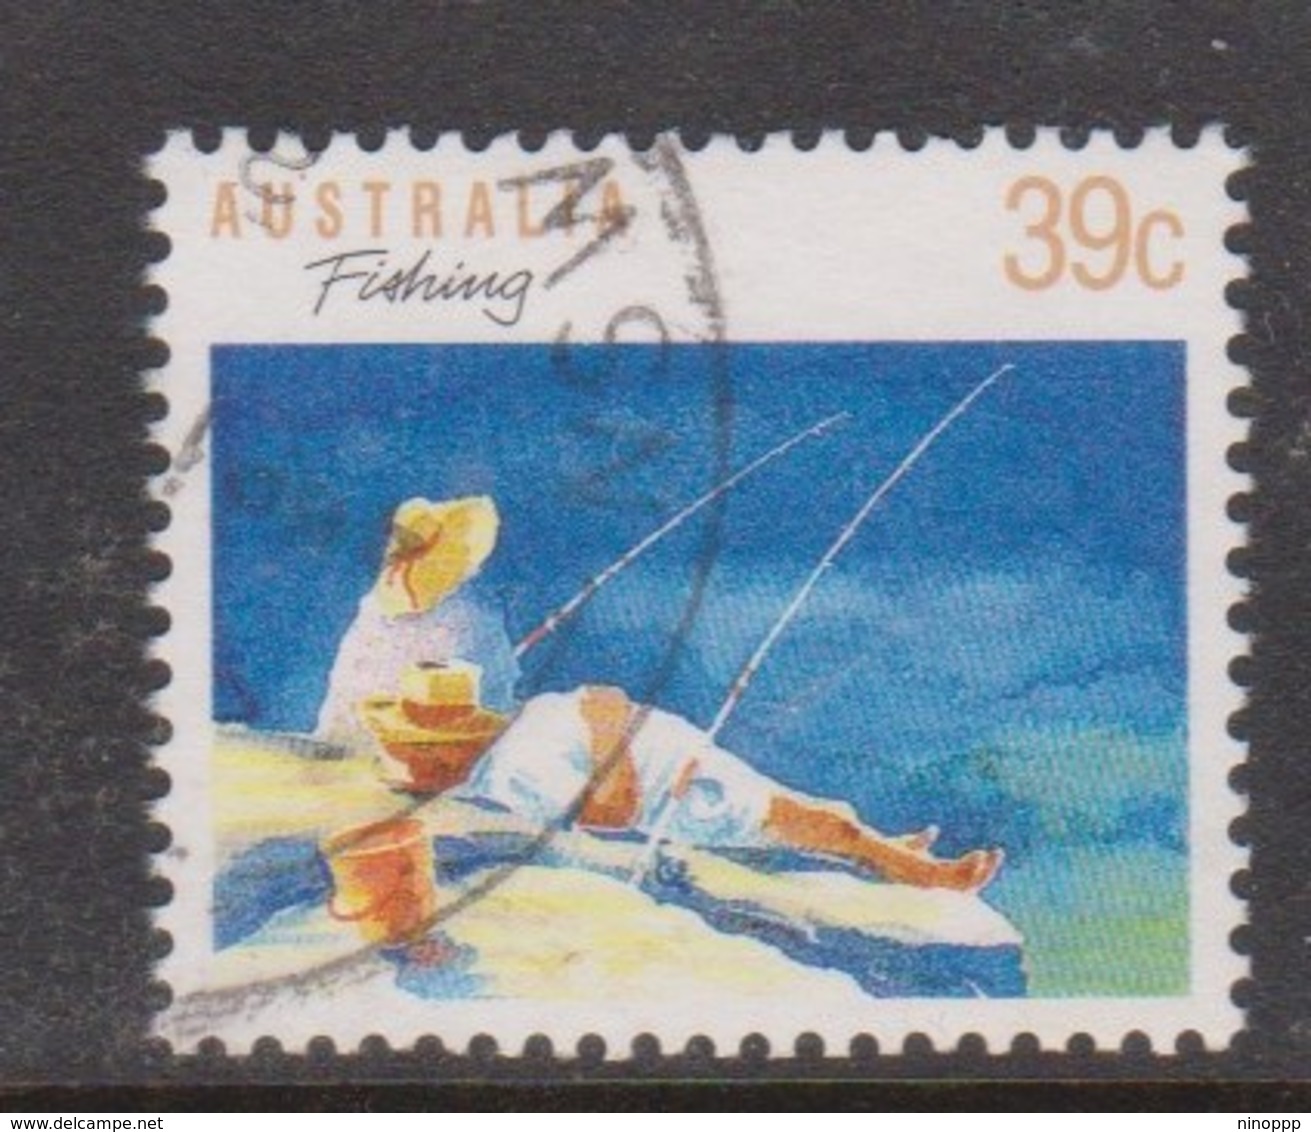 Australia ASC 1185 1989 Sports 39c Fishing Perf 13 X 13.5, Used - Proeven & Herdruk